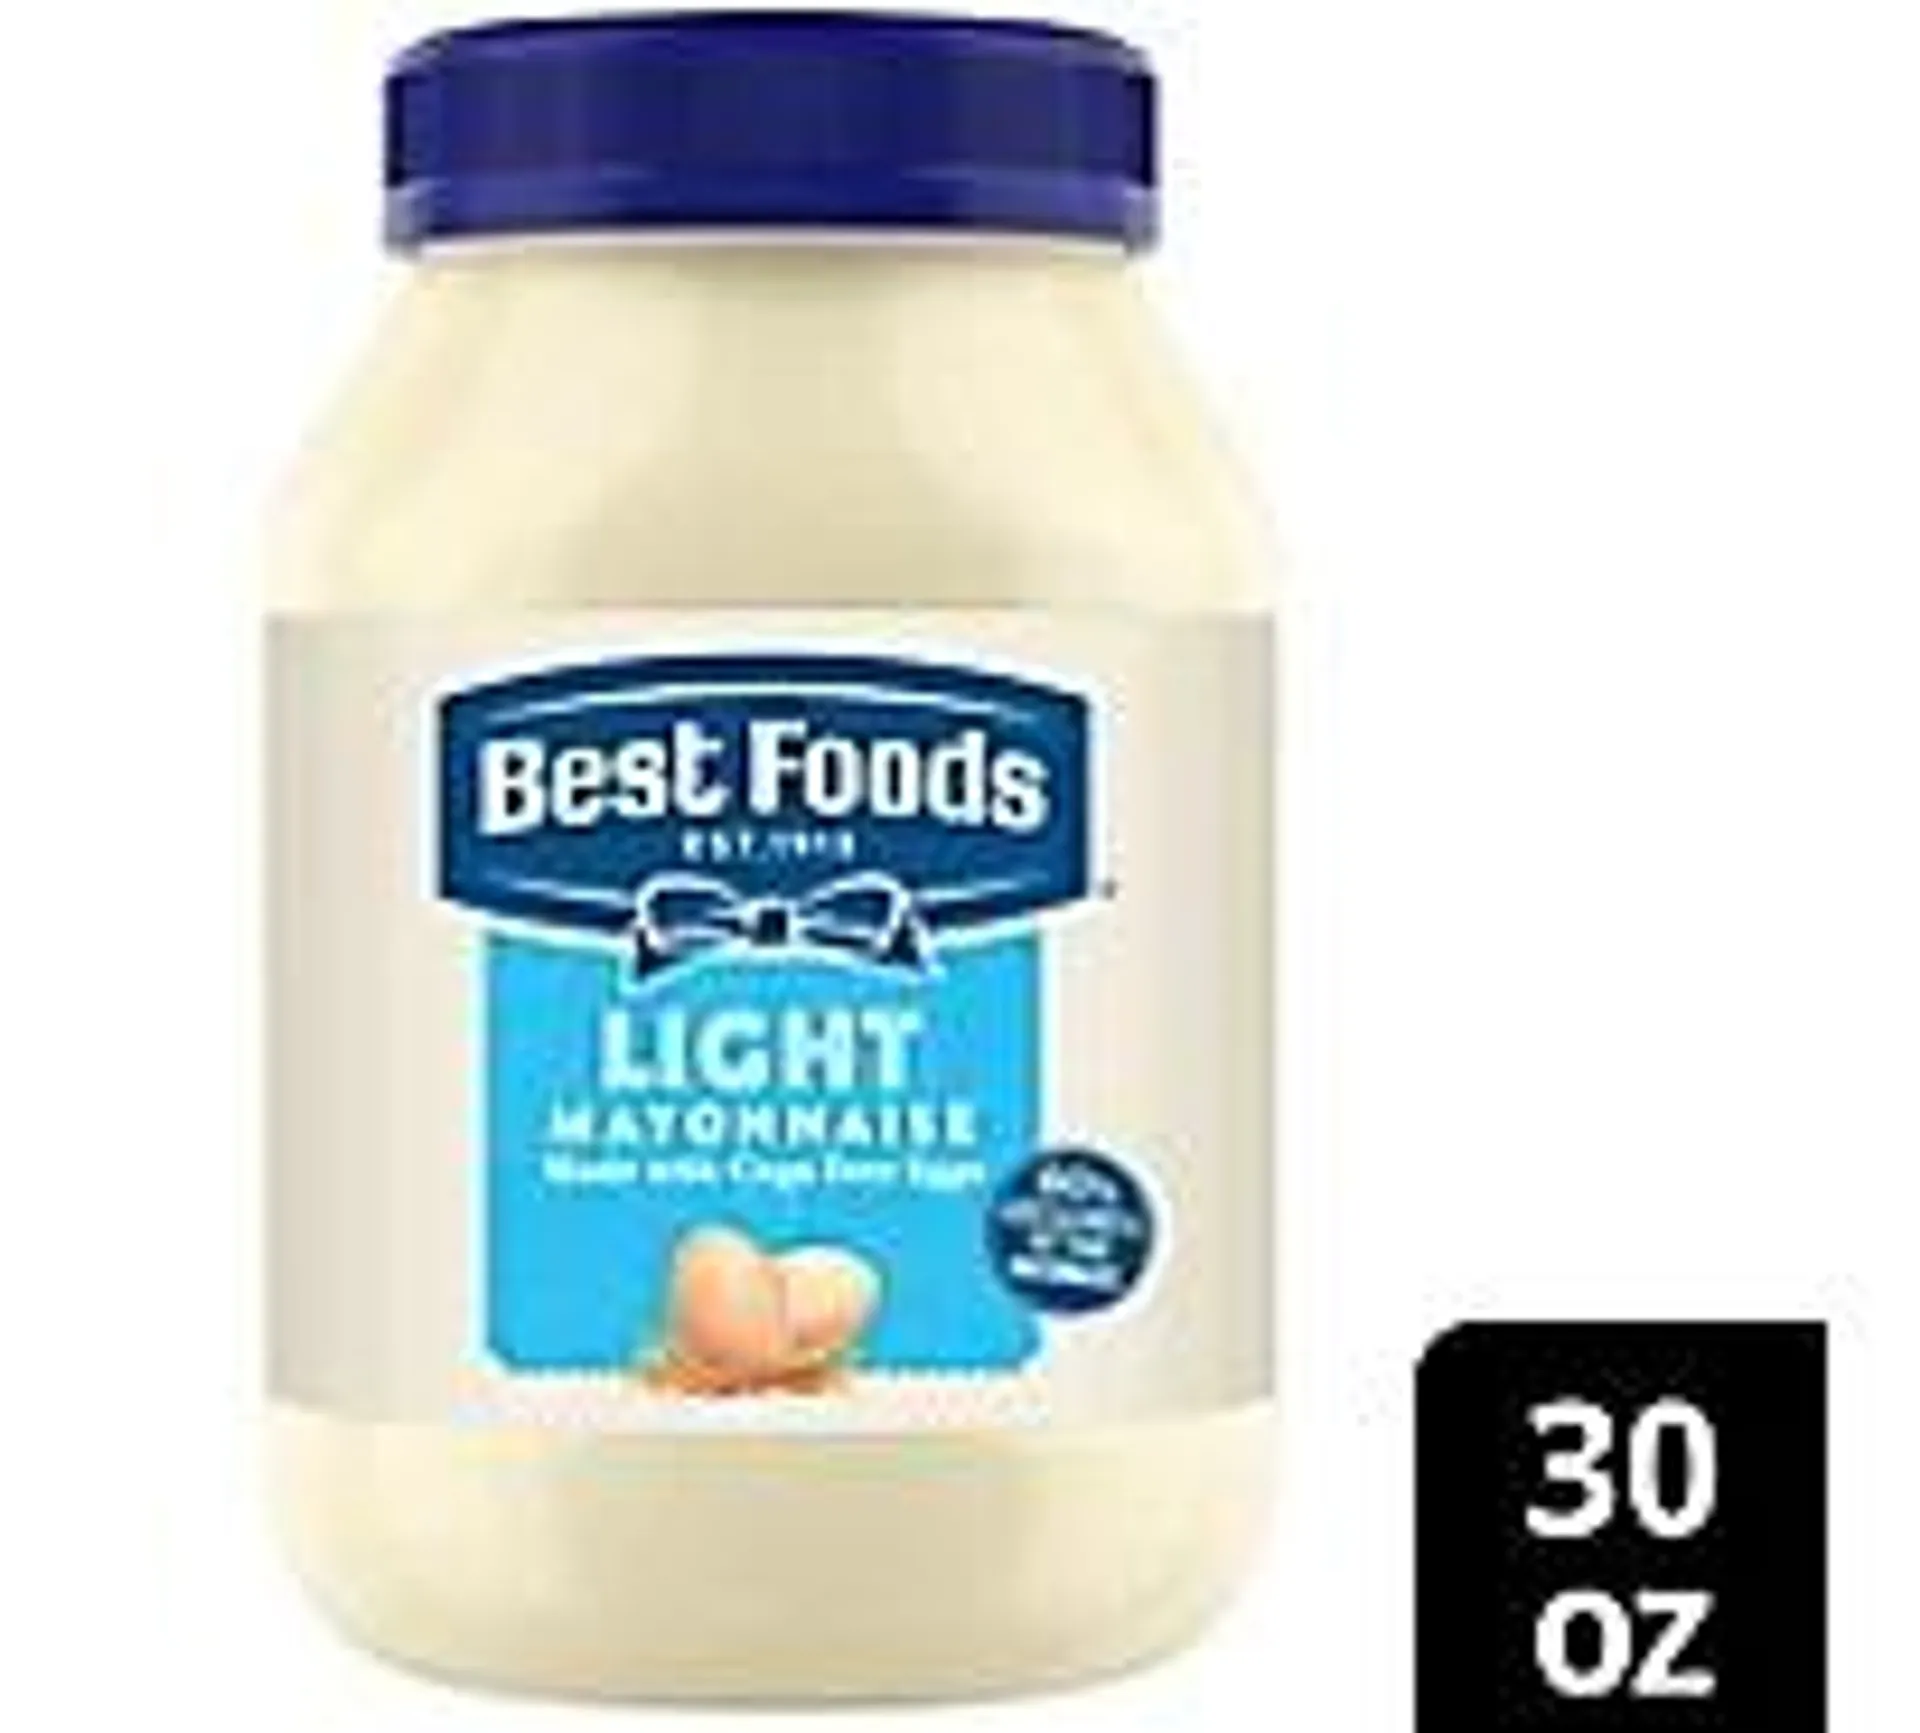 Best Foods Light Mayonnaise - 30 Oz